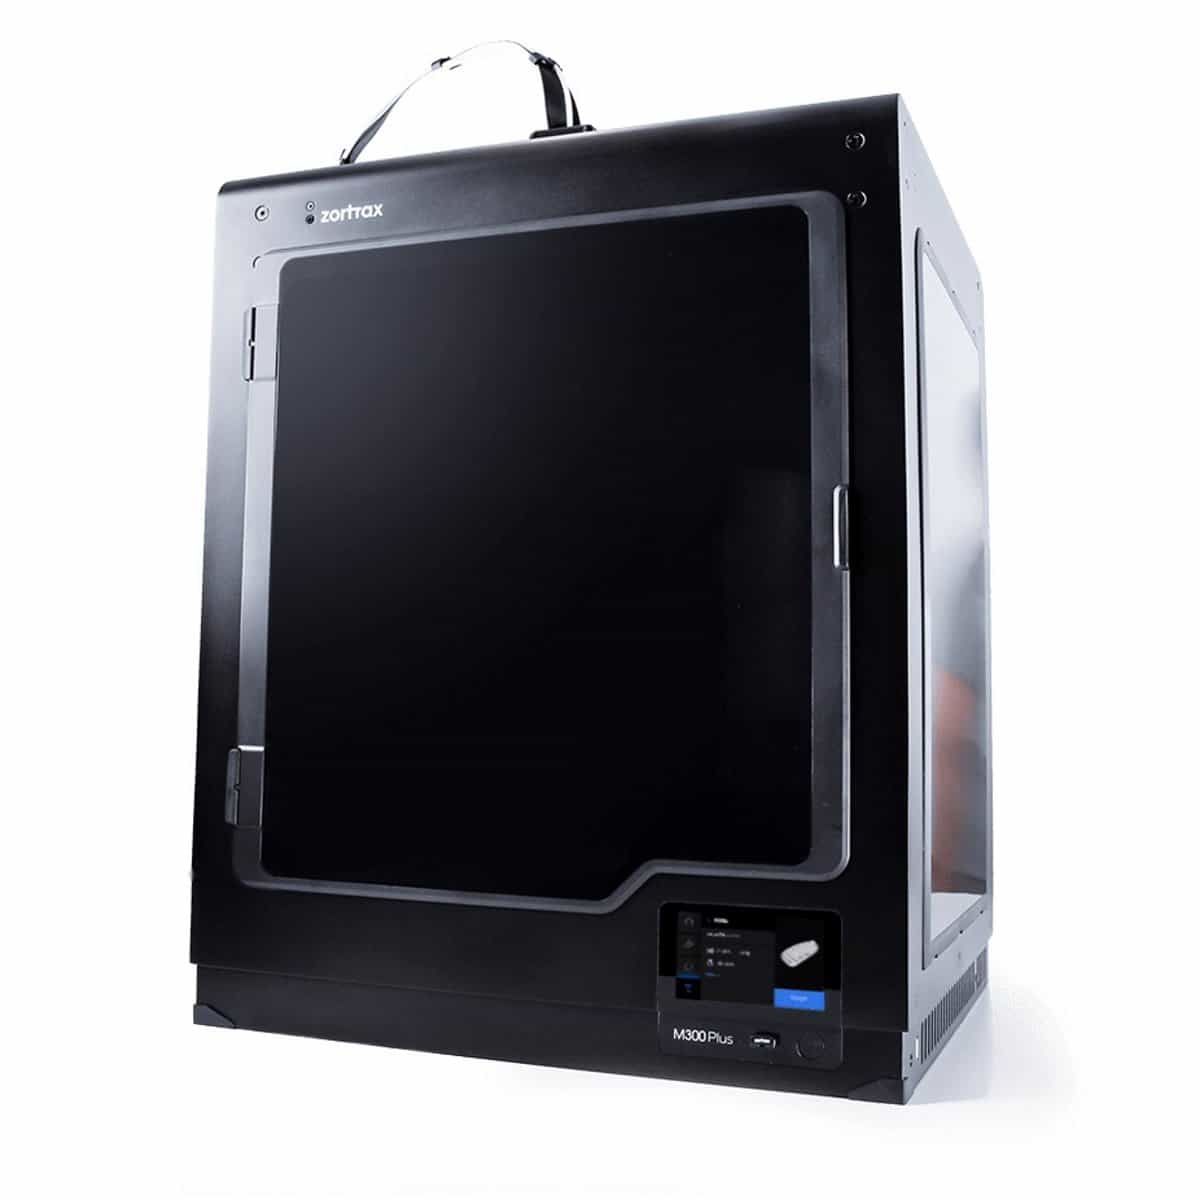 Køb Zortrax M300 Plus 3d printer - Pris 26899.00 kr.